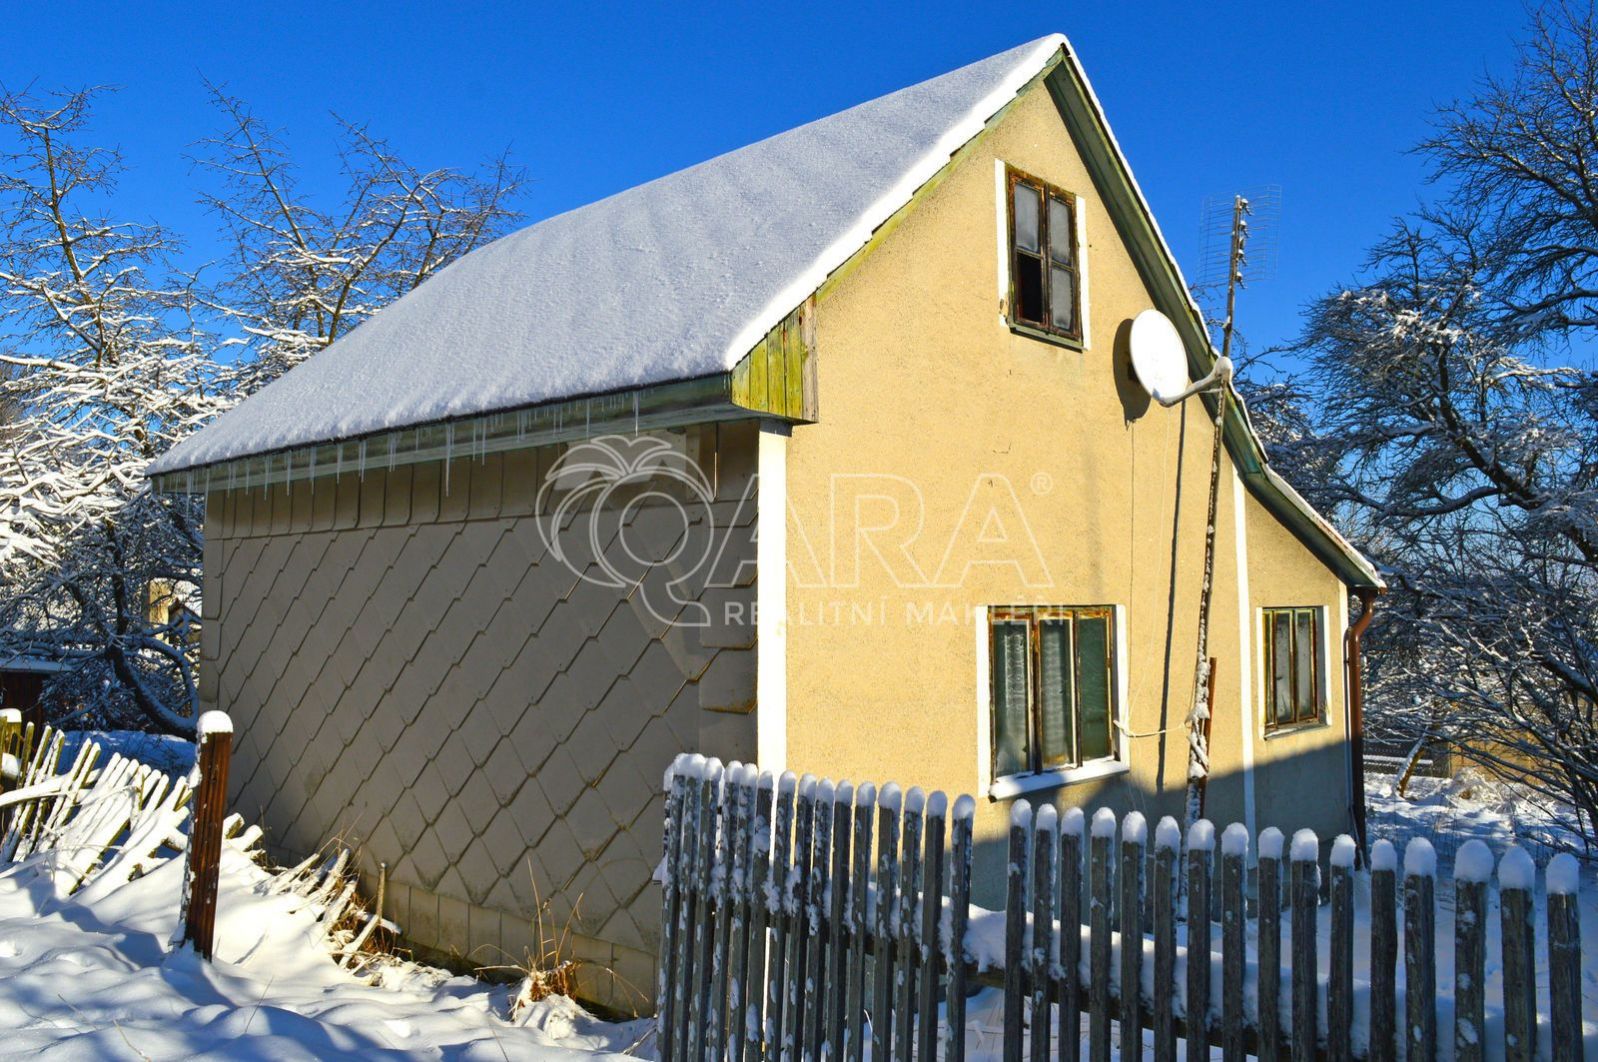 Prodej rodinný dům 84m2, pozemek 819m2-obec Vacov - Rohanov, obrázek č. 1